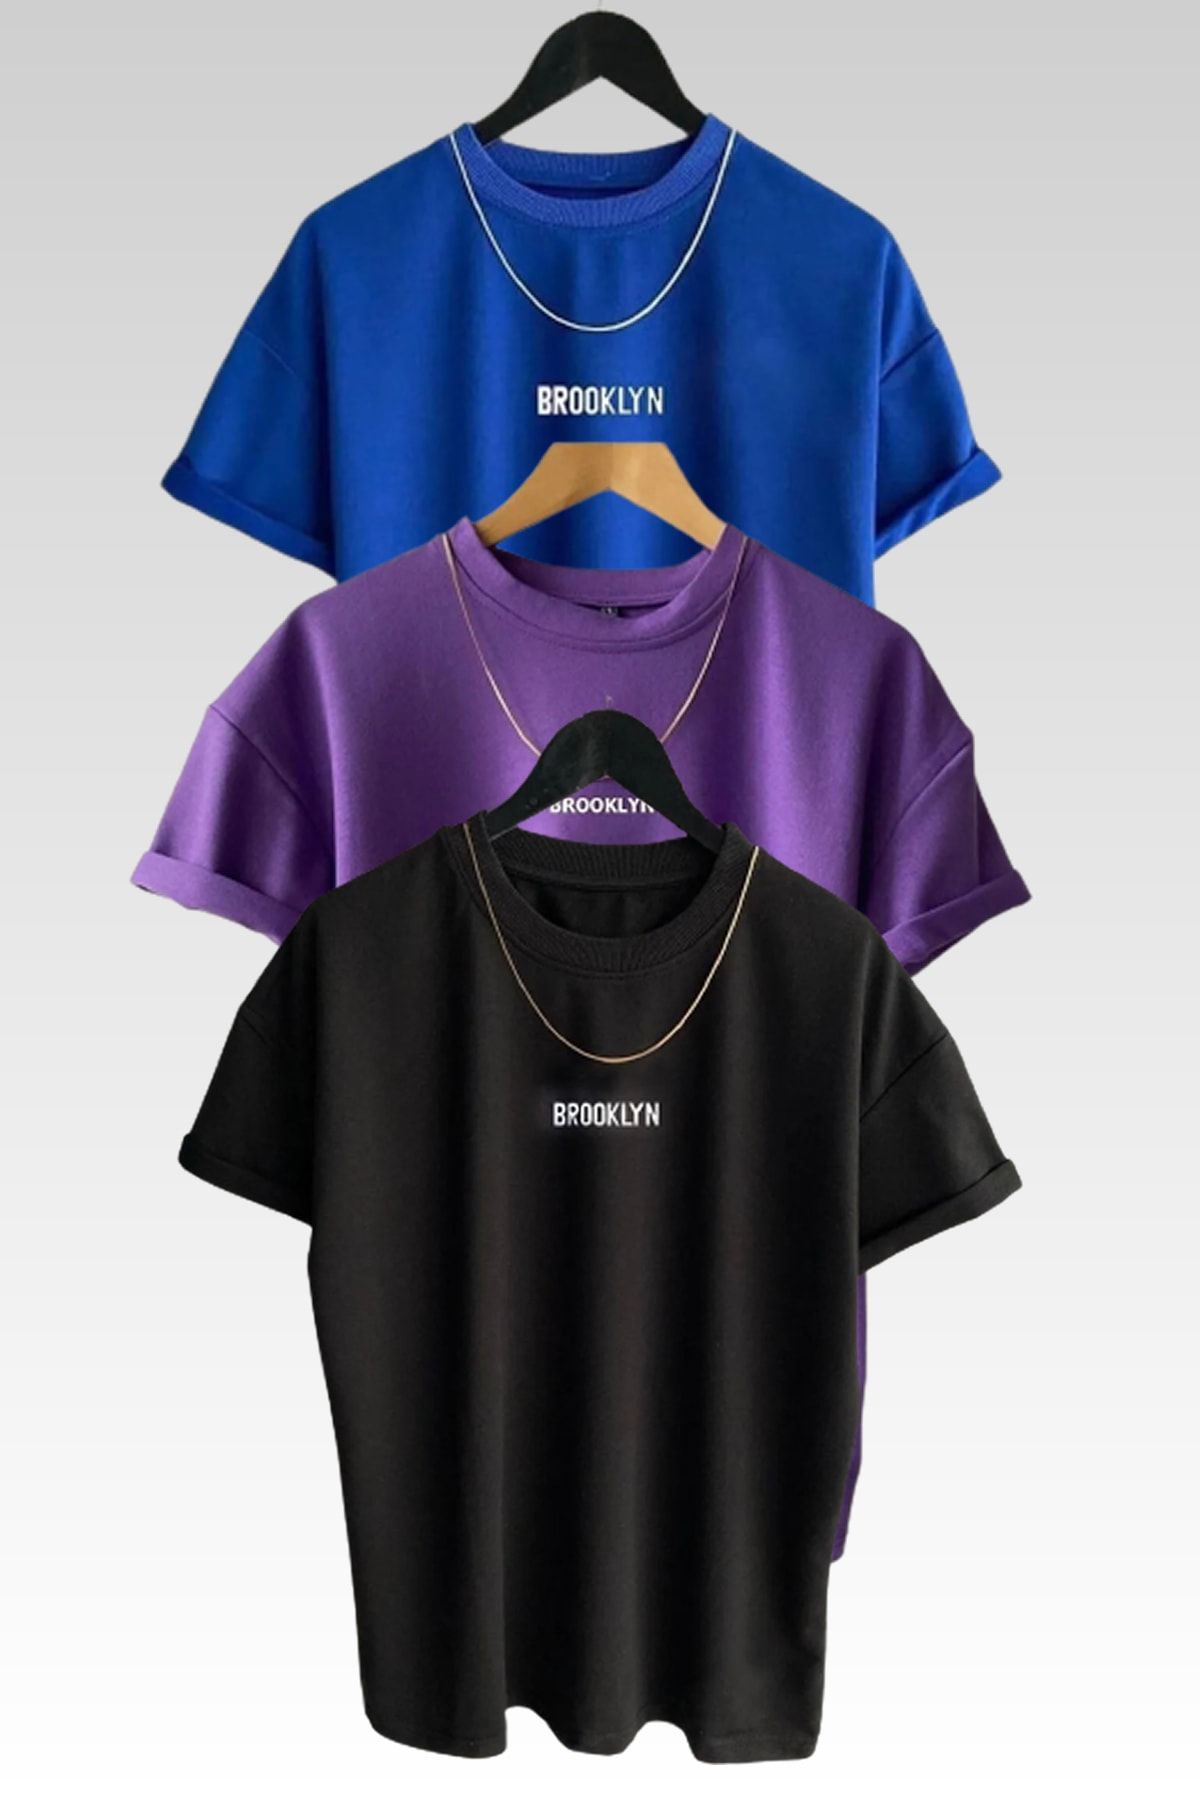 MODAGEN Unisex Brooklyn Baskılı 3lü Paket Siyah-mavi-mor T-shirt